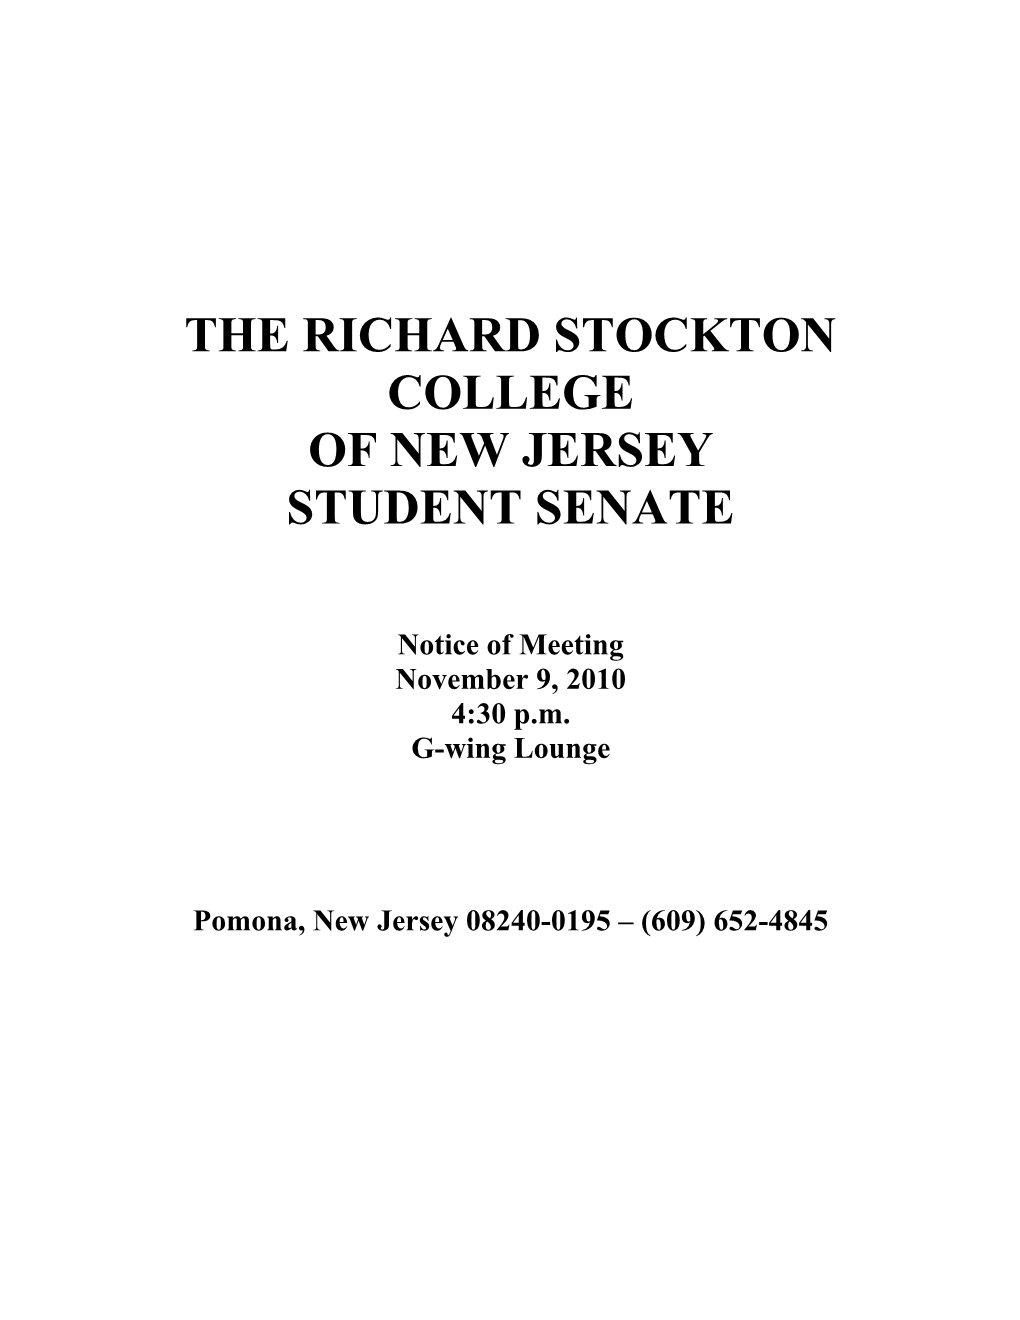 The Richard Stockton College